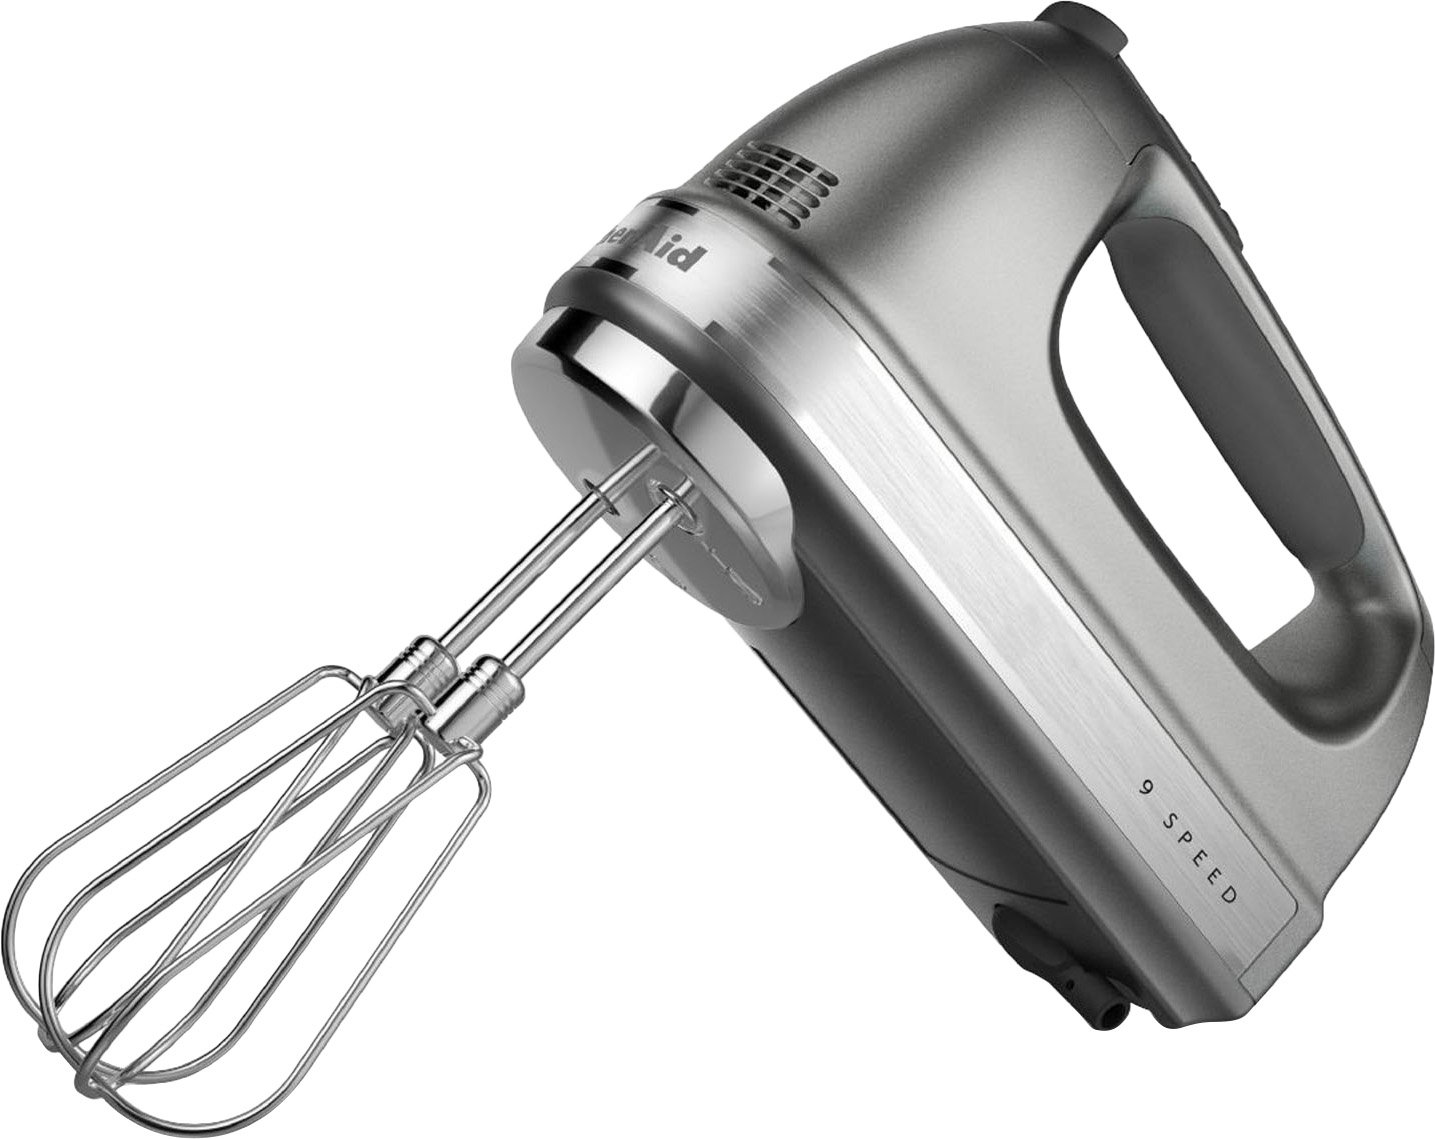 KitchenAid 9-Speed Hand Mixer Review: Adequate Performance